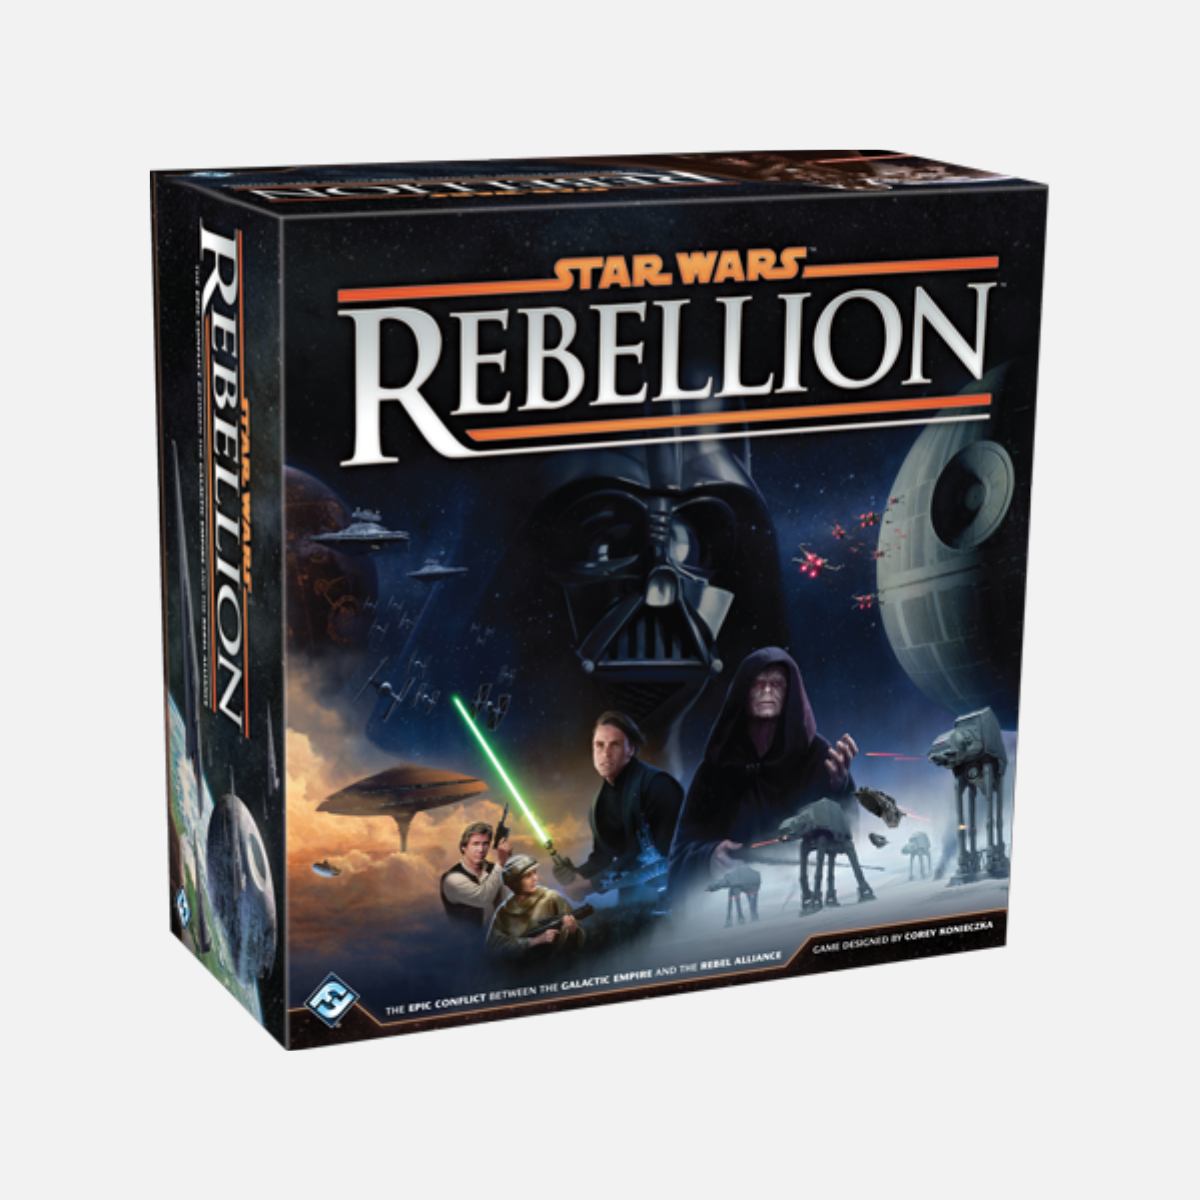 Star Wars Rebellion board game 